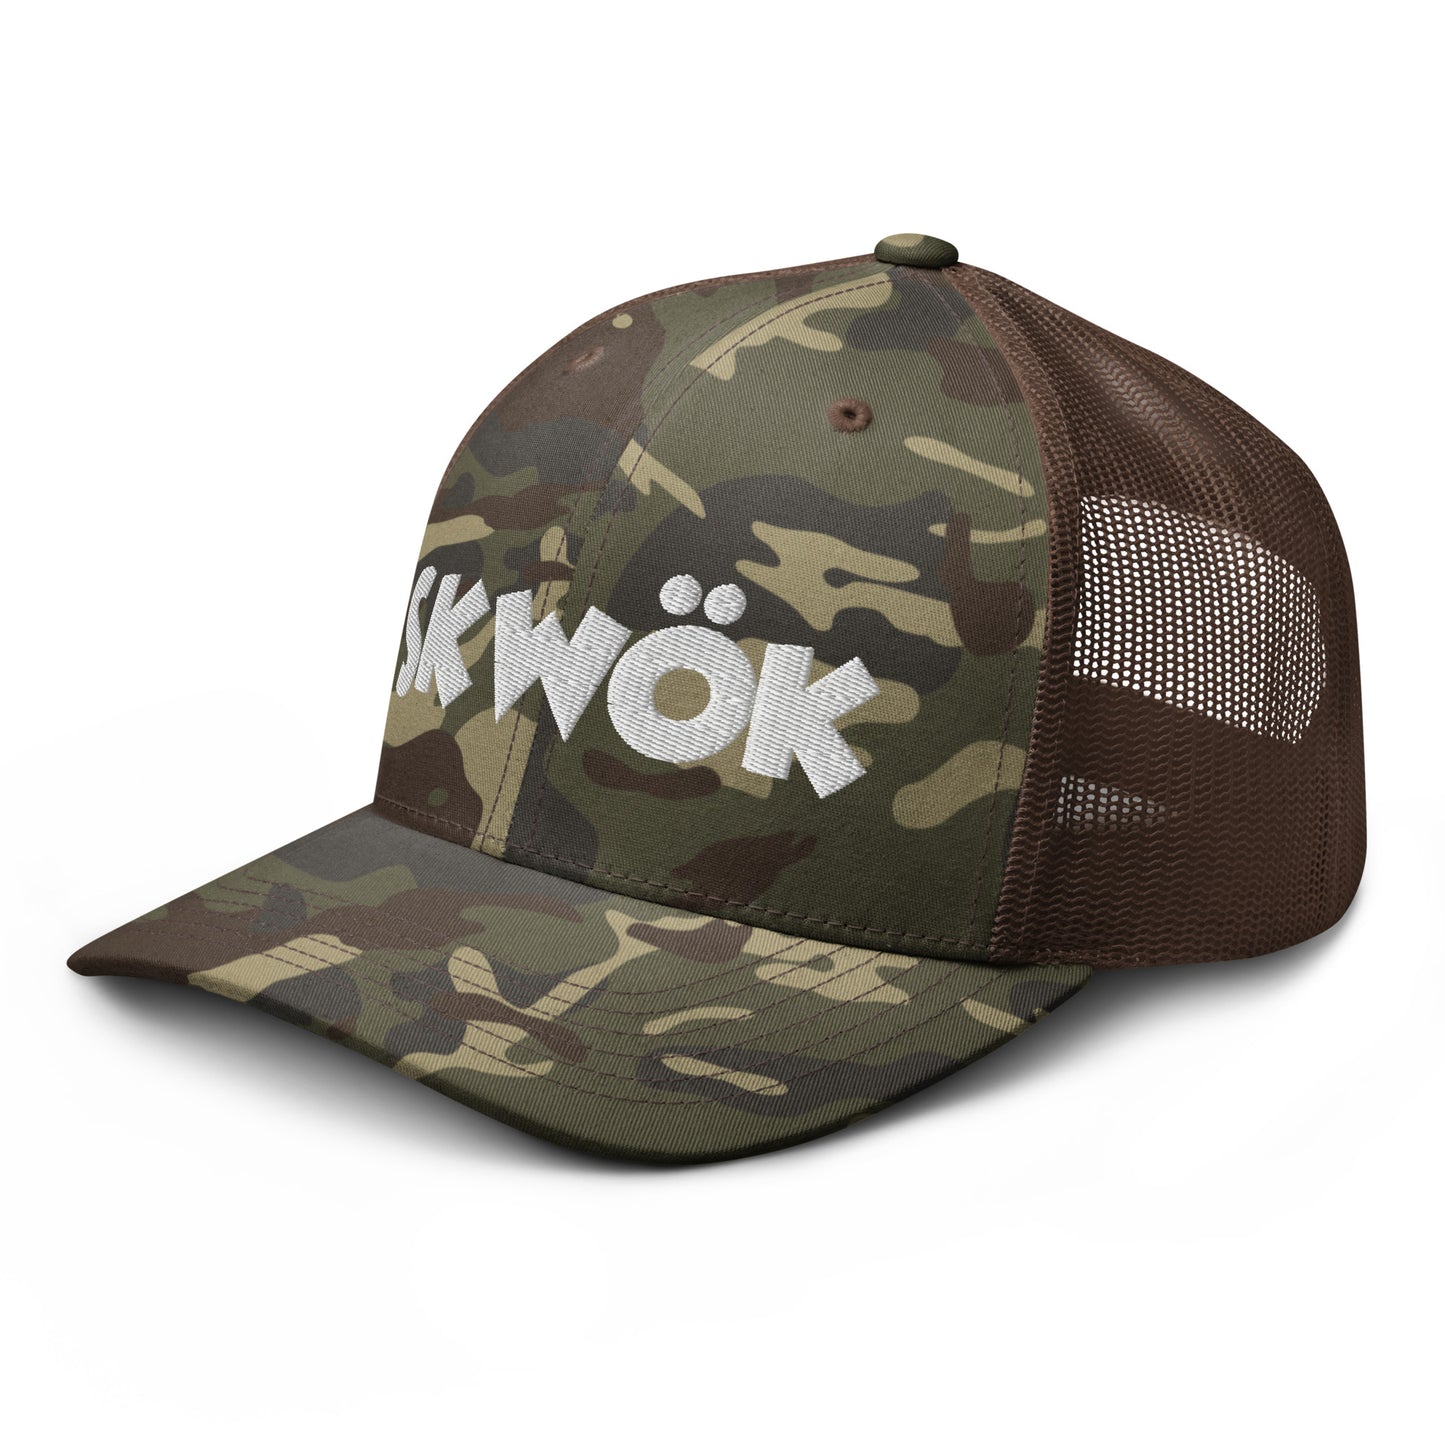 Skwok Brand / Hat / Traditional / OG Logo / 3D Puff / Camouflage / White